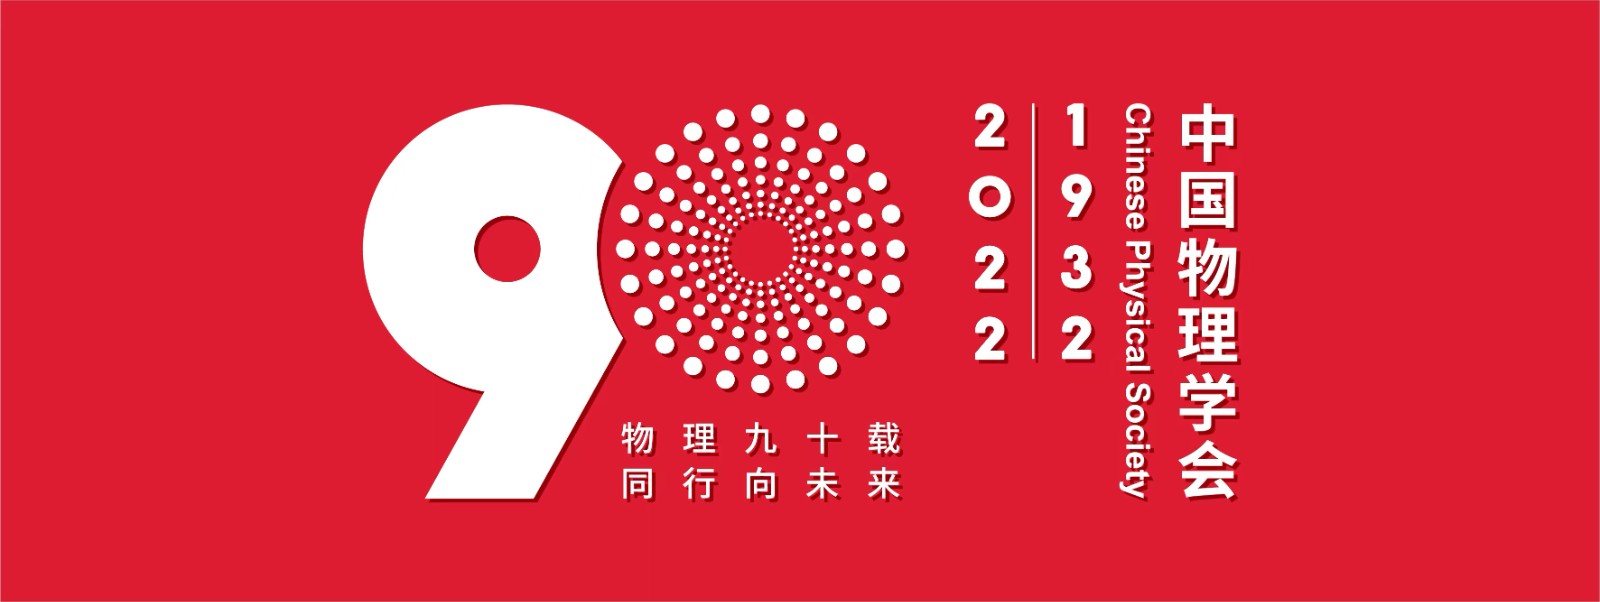 <p>
	中国物理学会九十周年庆祝标识及宣传口号：
</p>
<p style="font-size:18px;">
	物理九十载，同行向未来<br />
筑梦九秩，砥砺同行<br />
继往开来，明理致远<br />
赋能物理，奔向未来
</p>